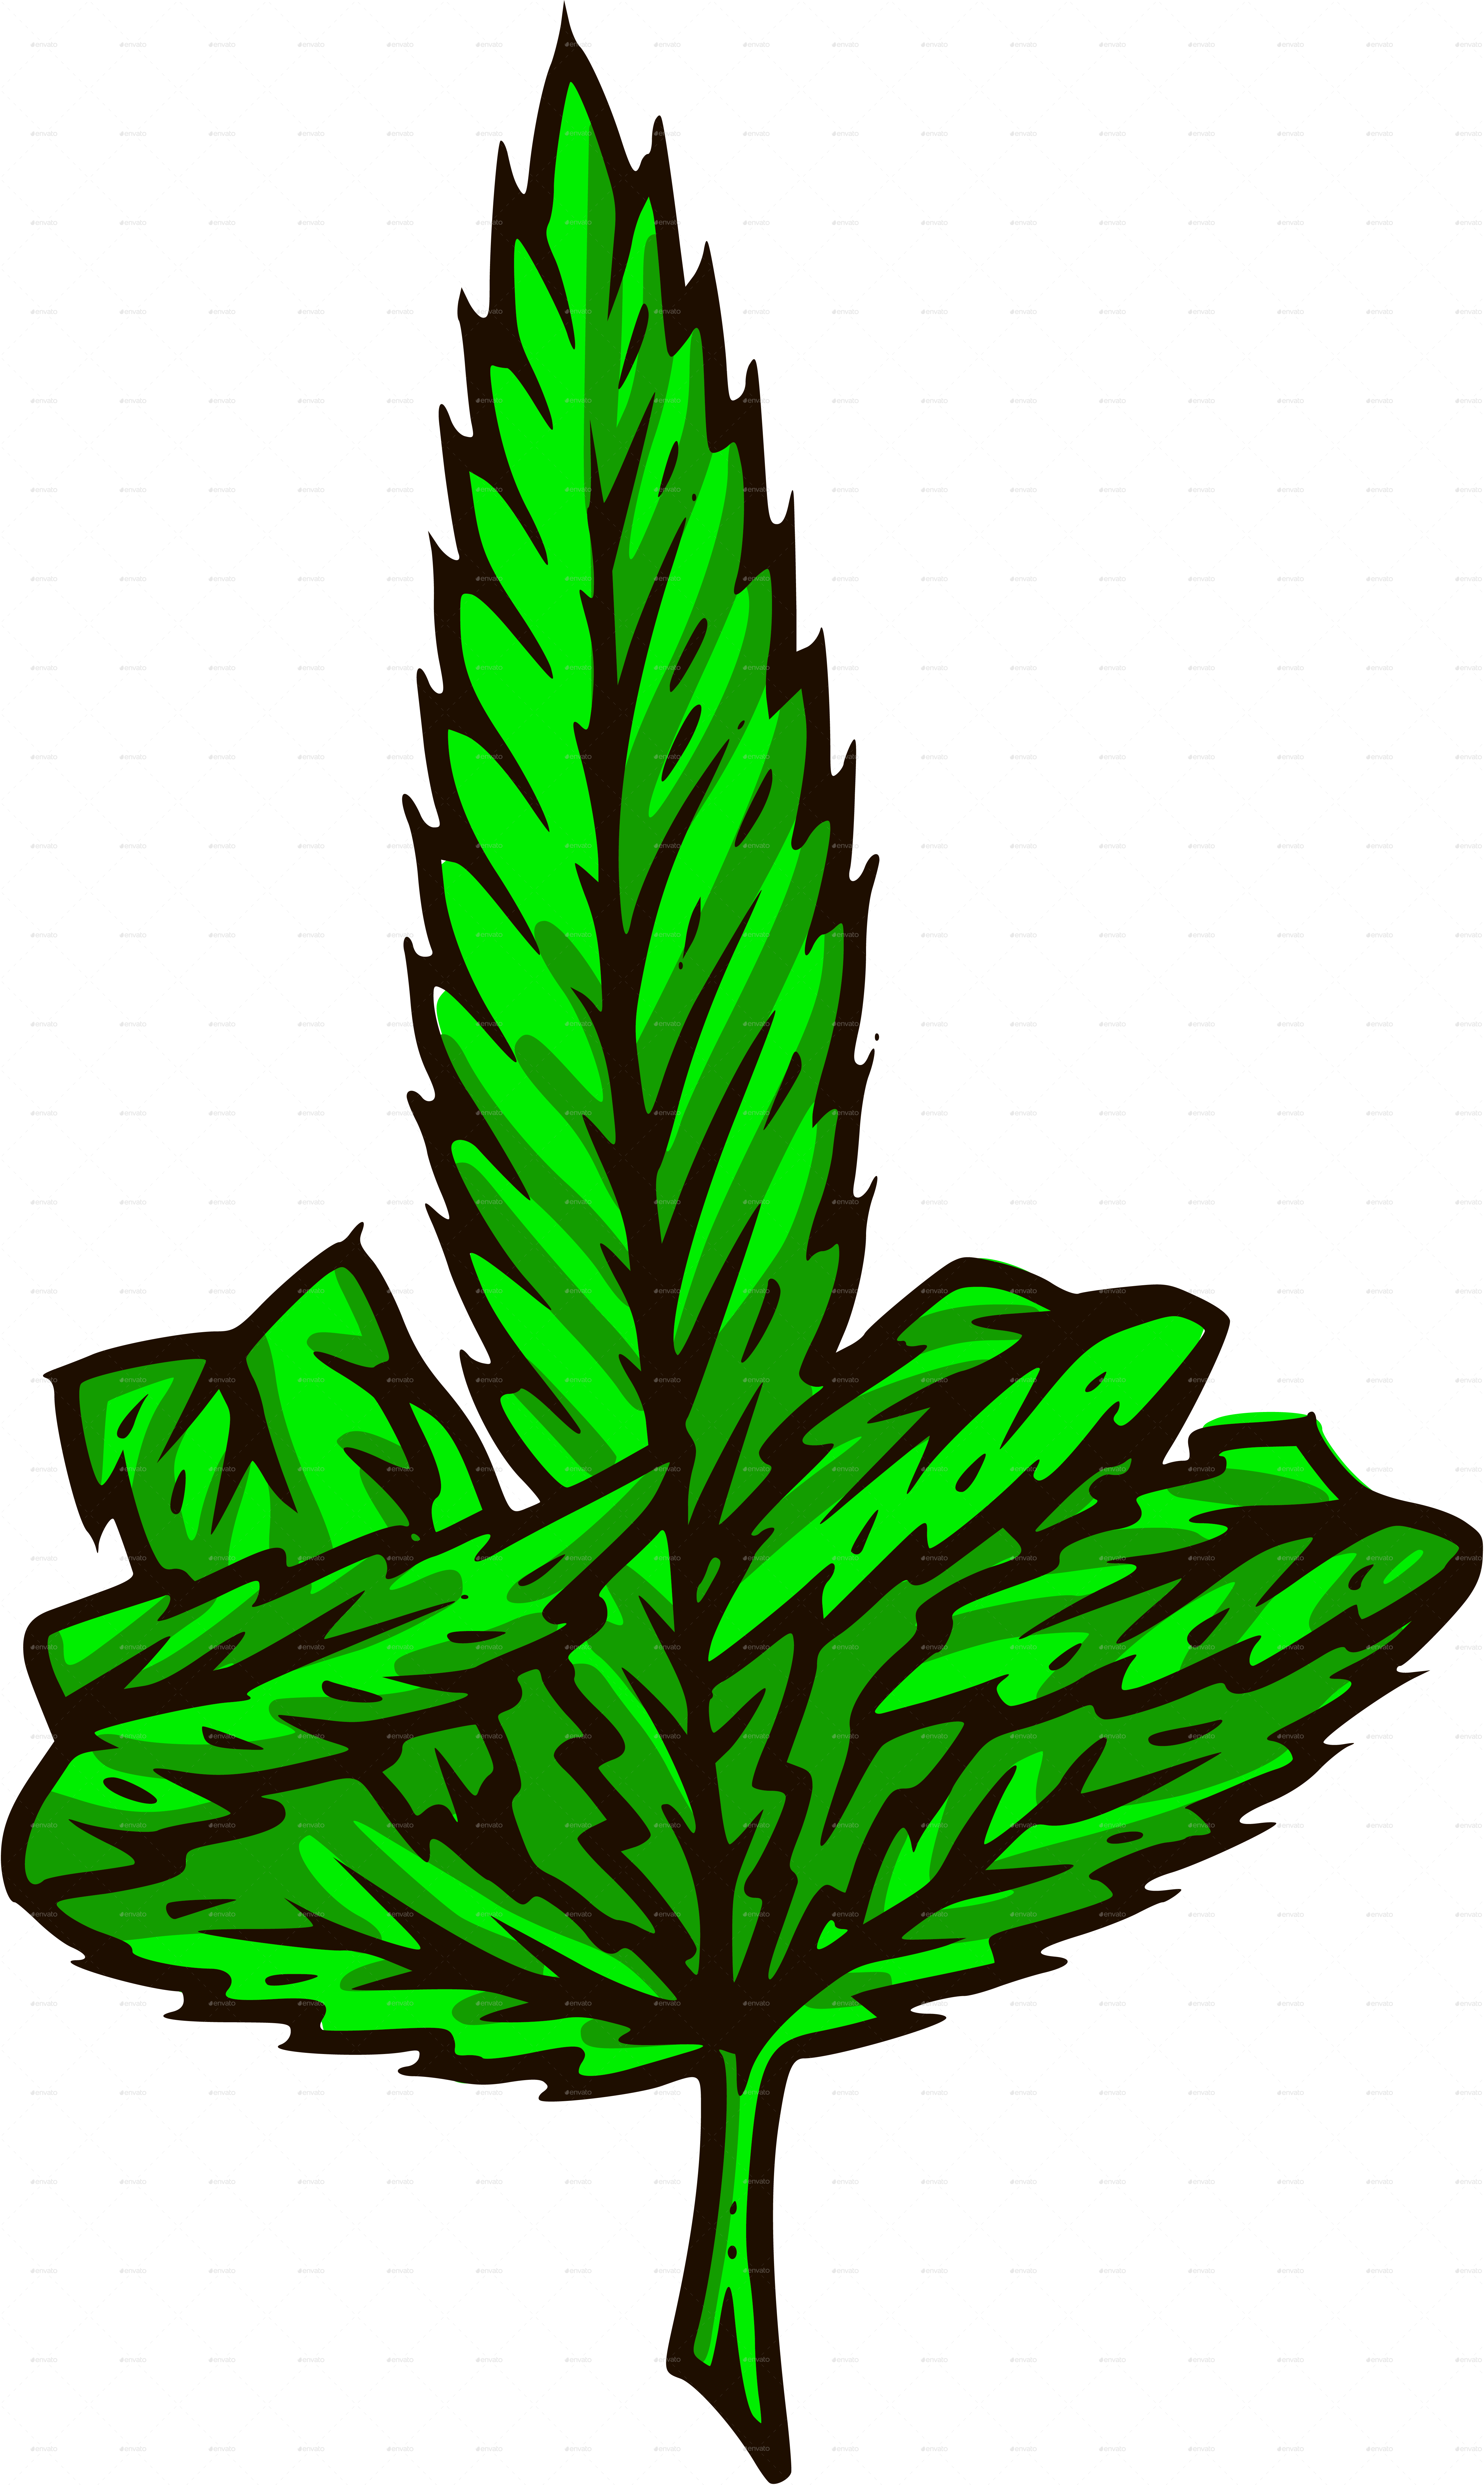 Marijuana Hand Gestures by roktiv | GraphicRiver